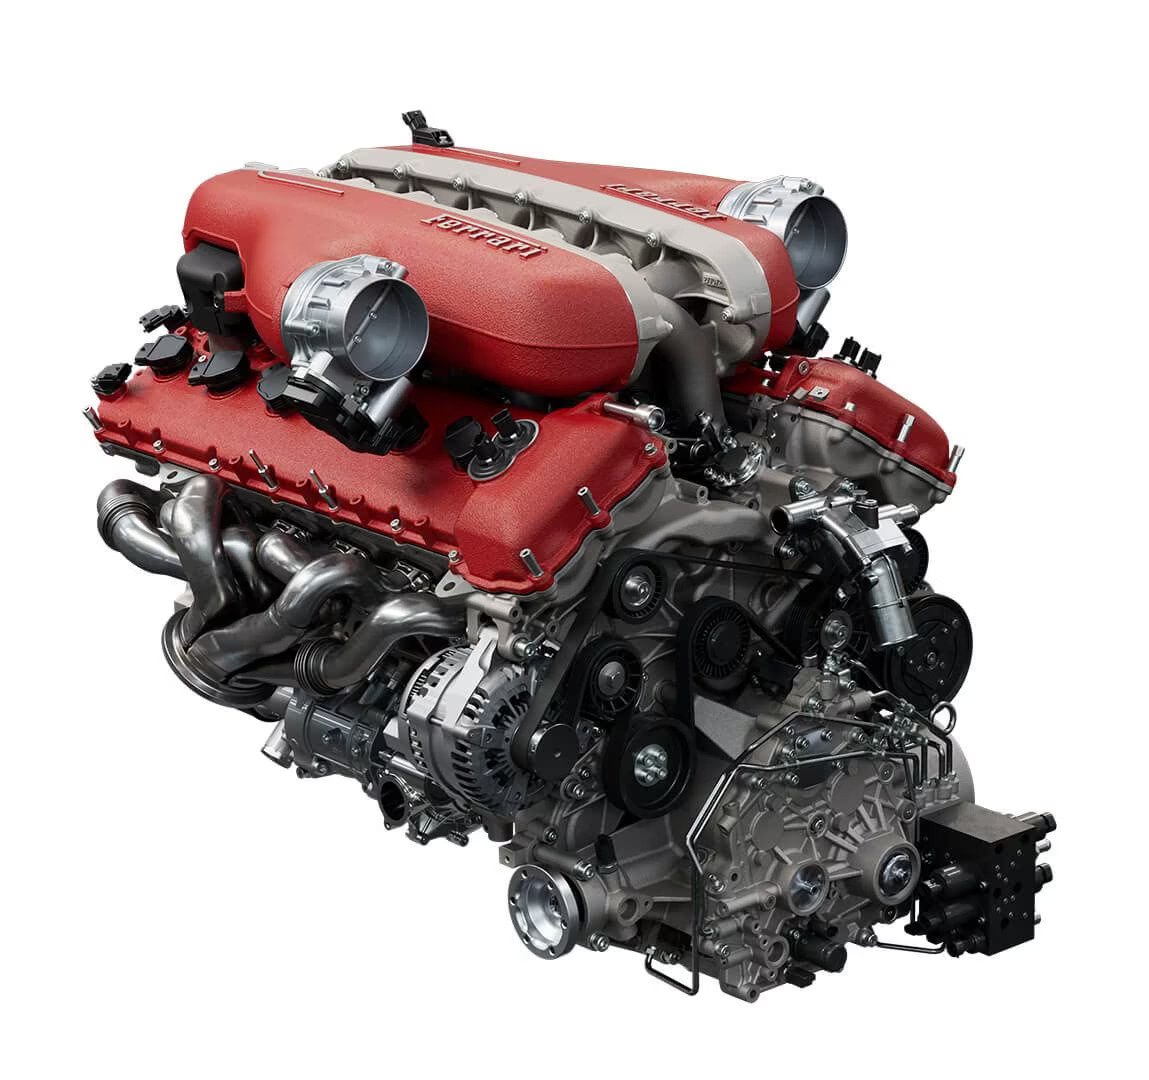 Ferrari Purosangue V12 engine.